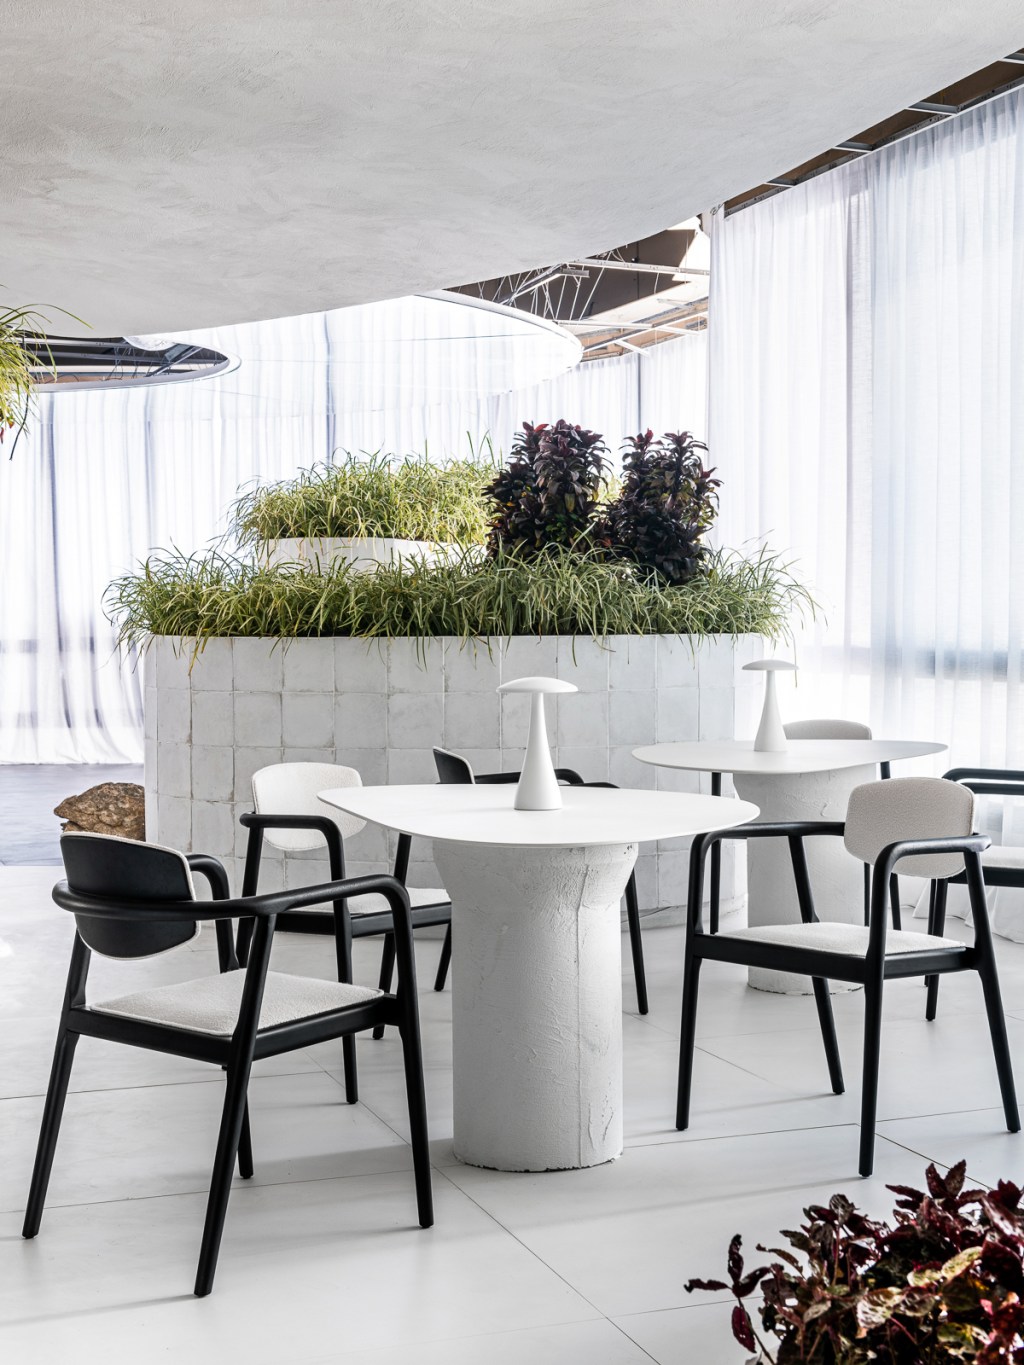 ricardo abreu restaurante casacor sao paulo 2022 mostra decoracao design mesa cadeira